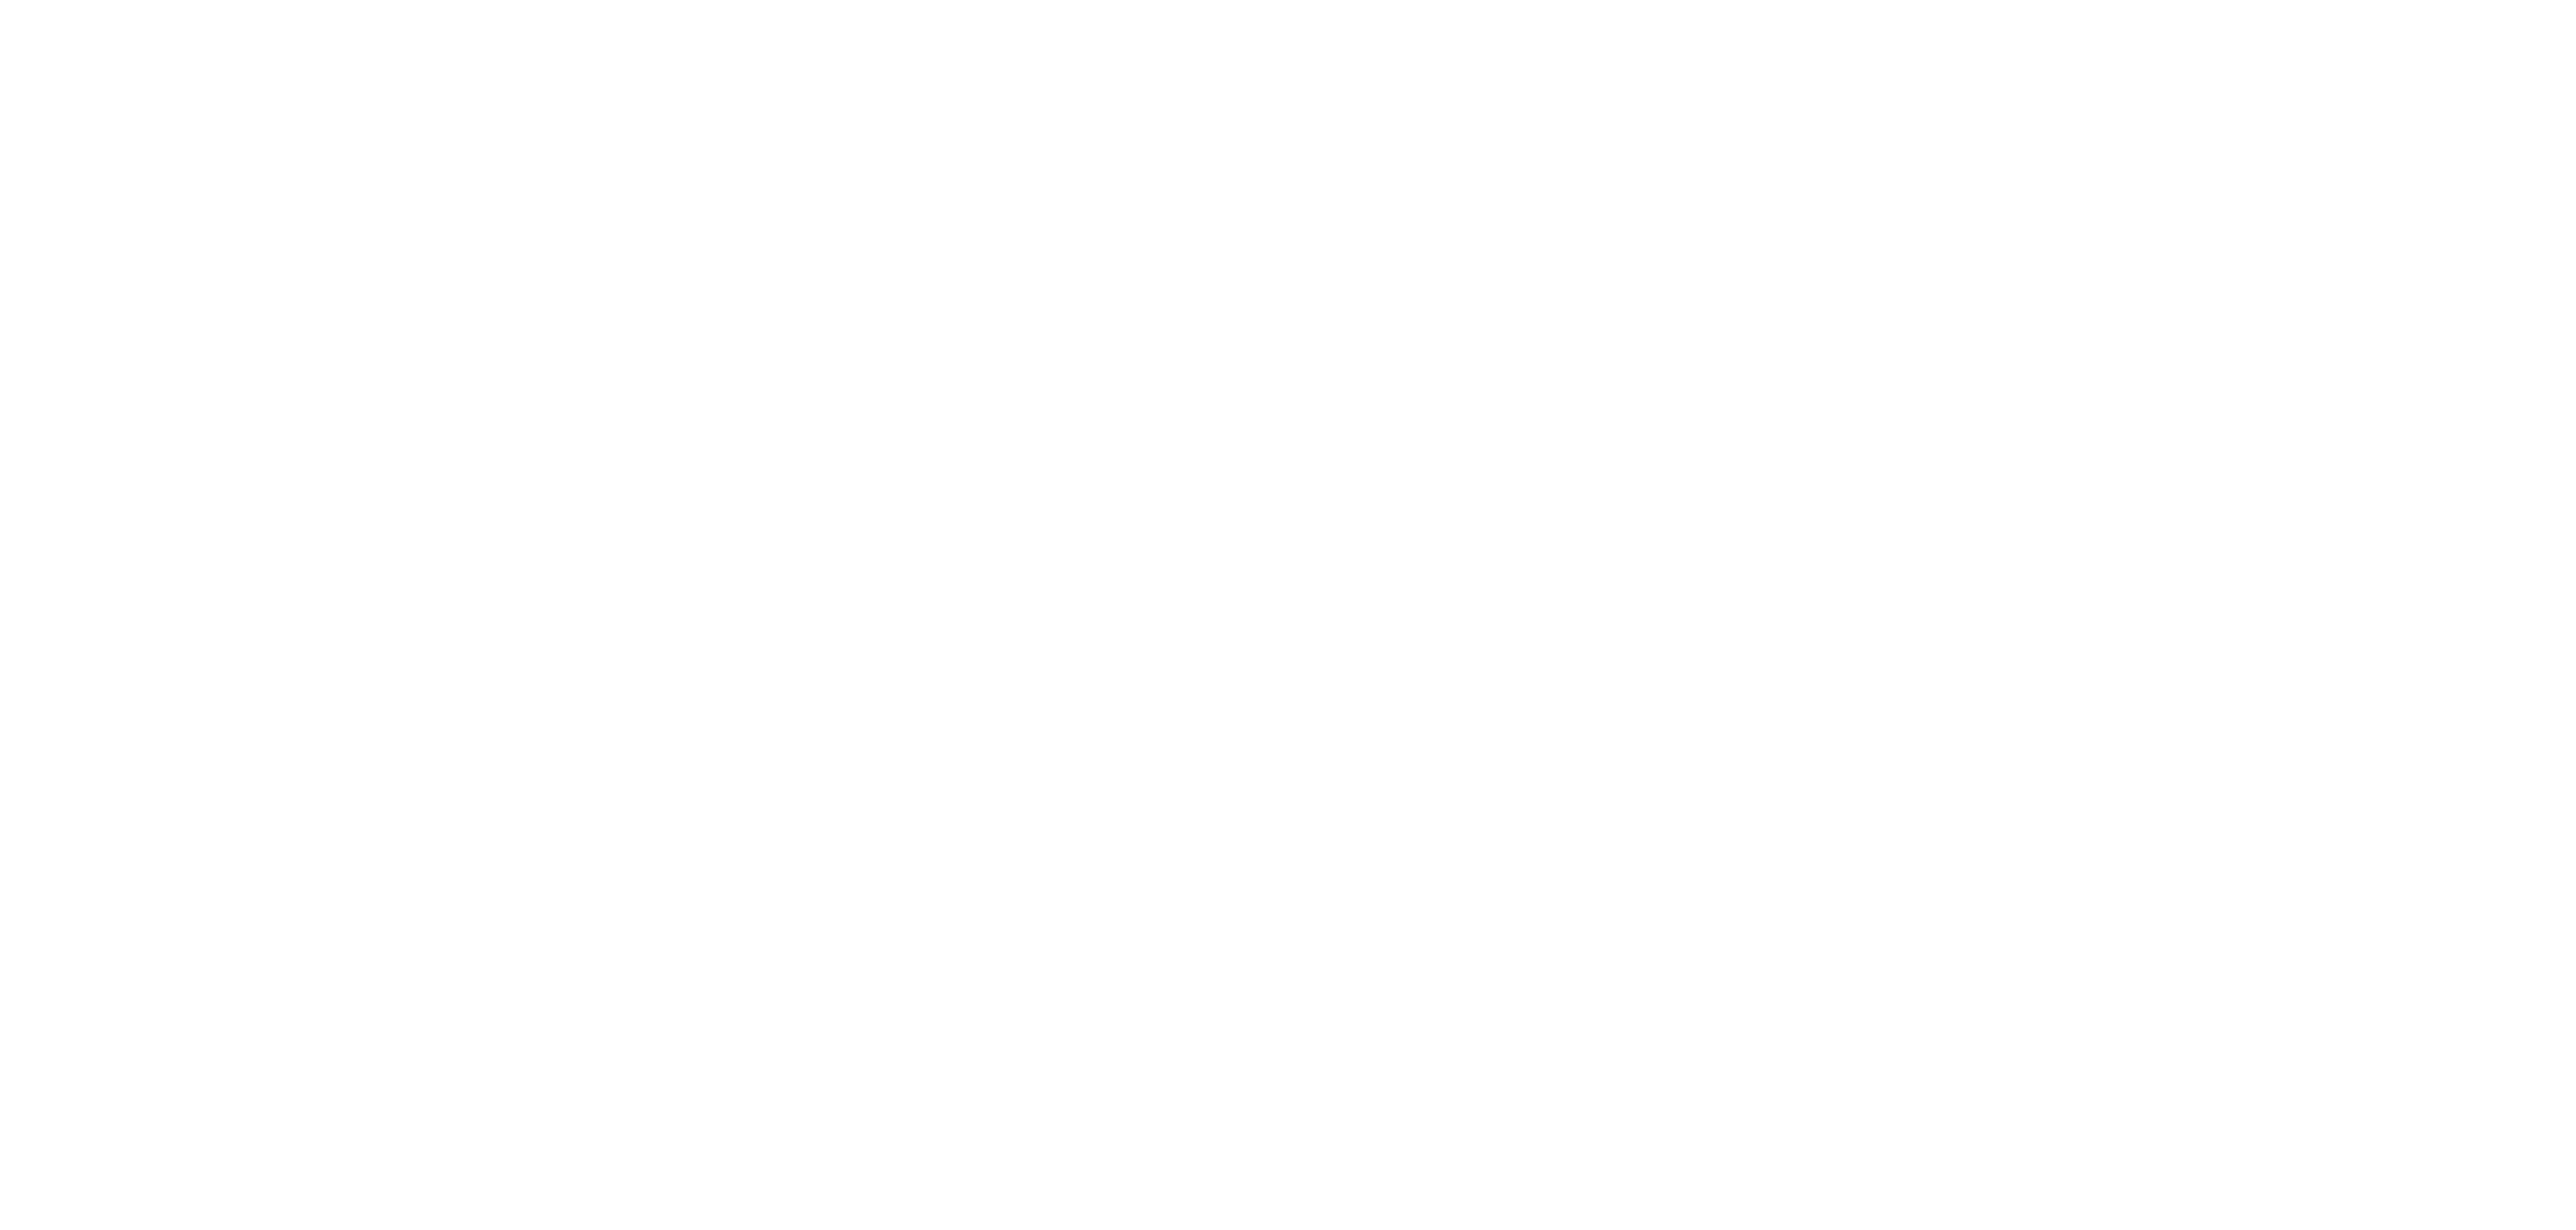 Night Frights